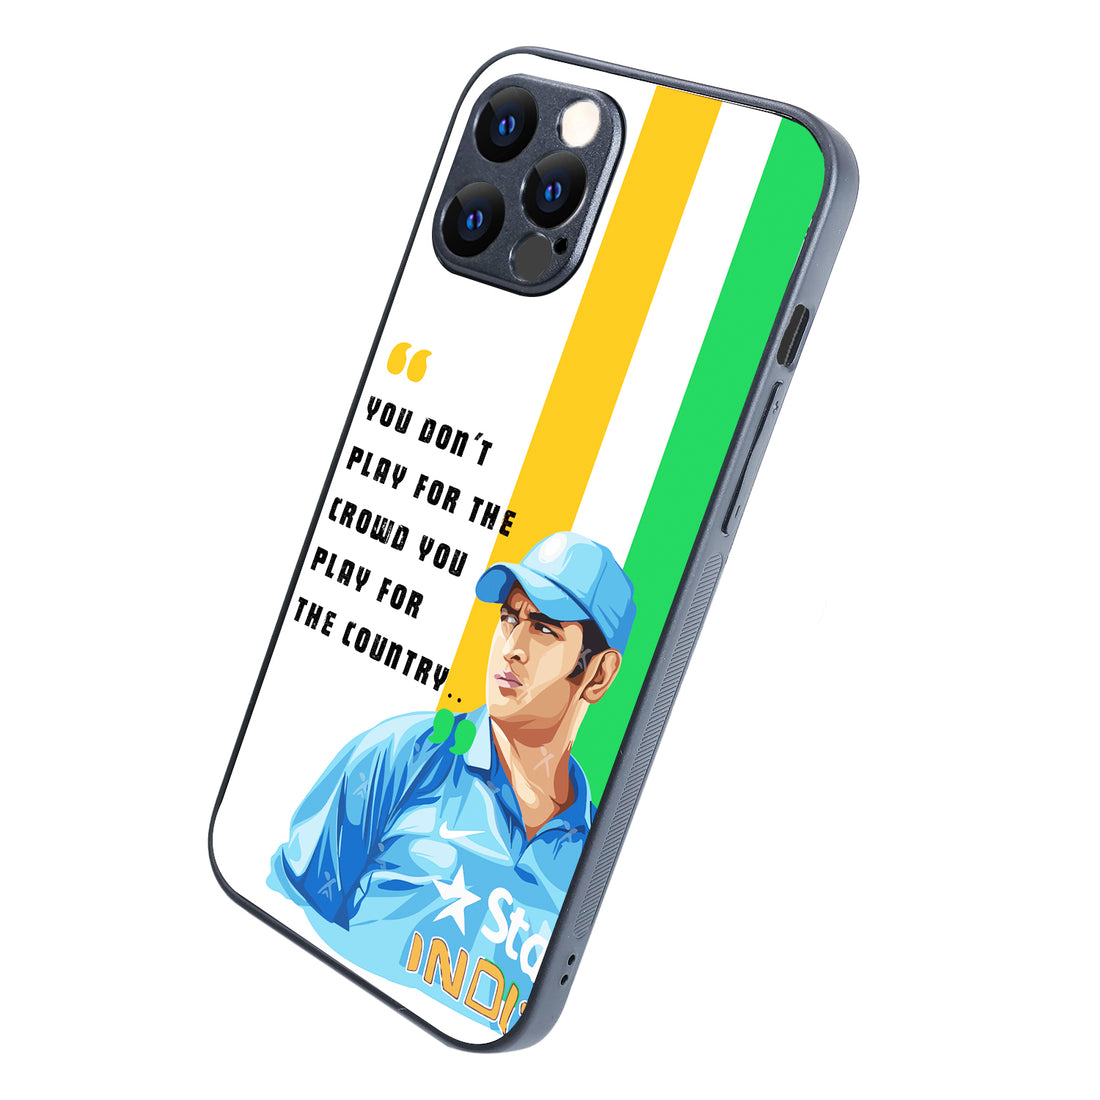 Dhoni Sports iPhone 12 Pro Max Case